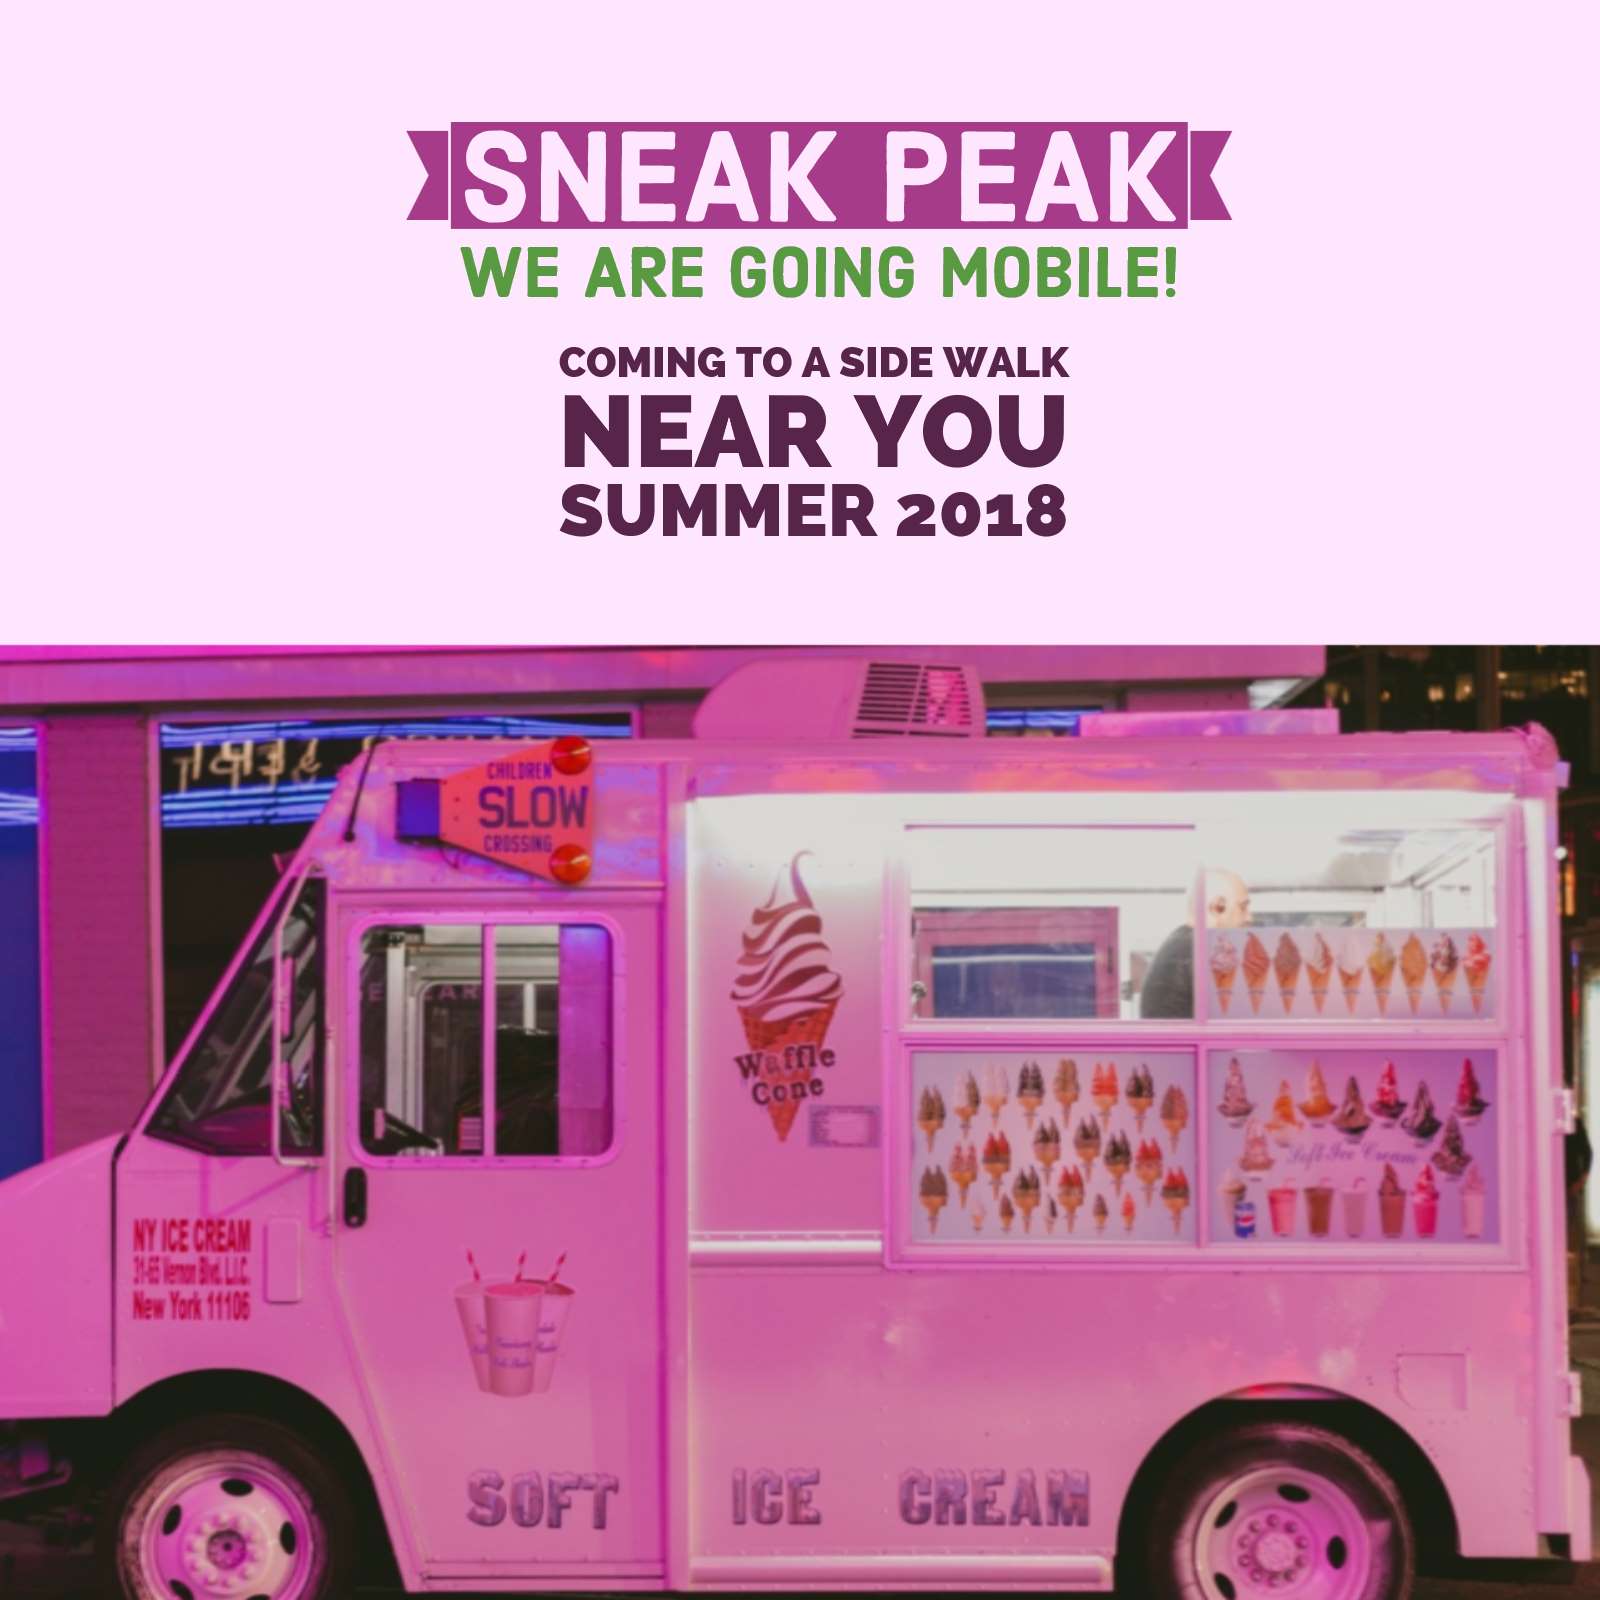 Sneak Peak - We are launching a Food Truck